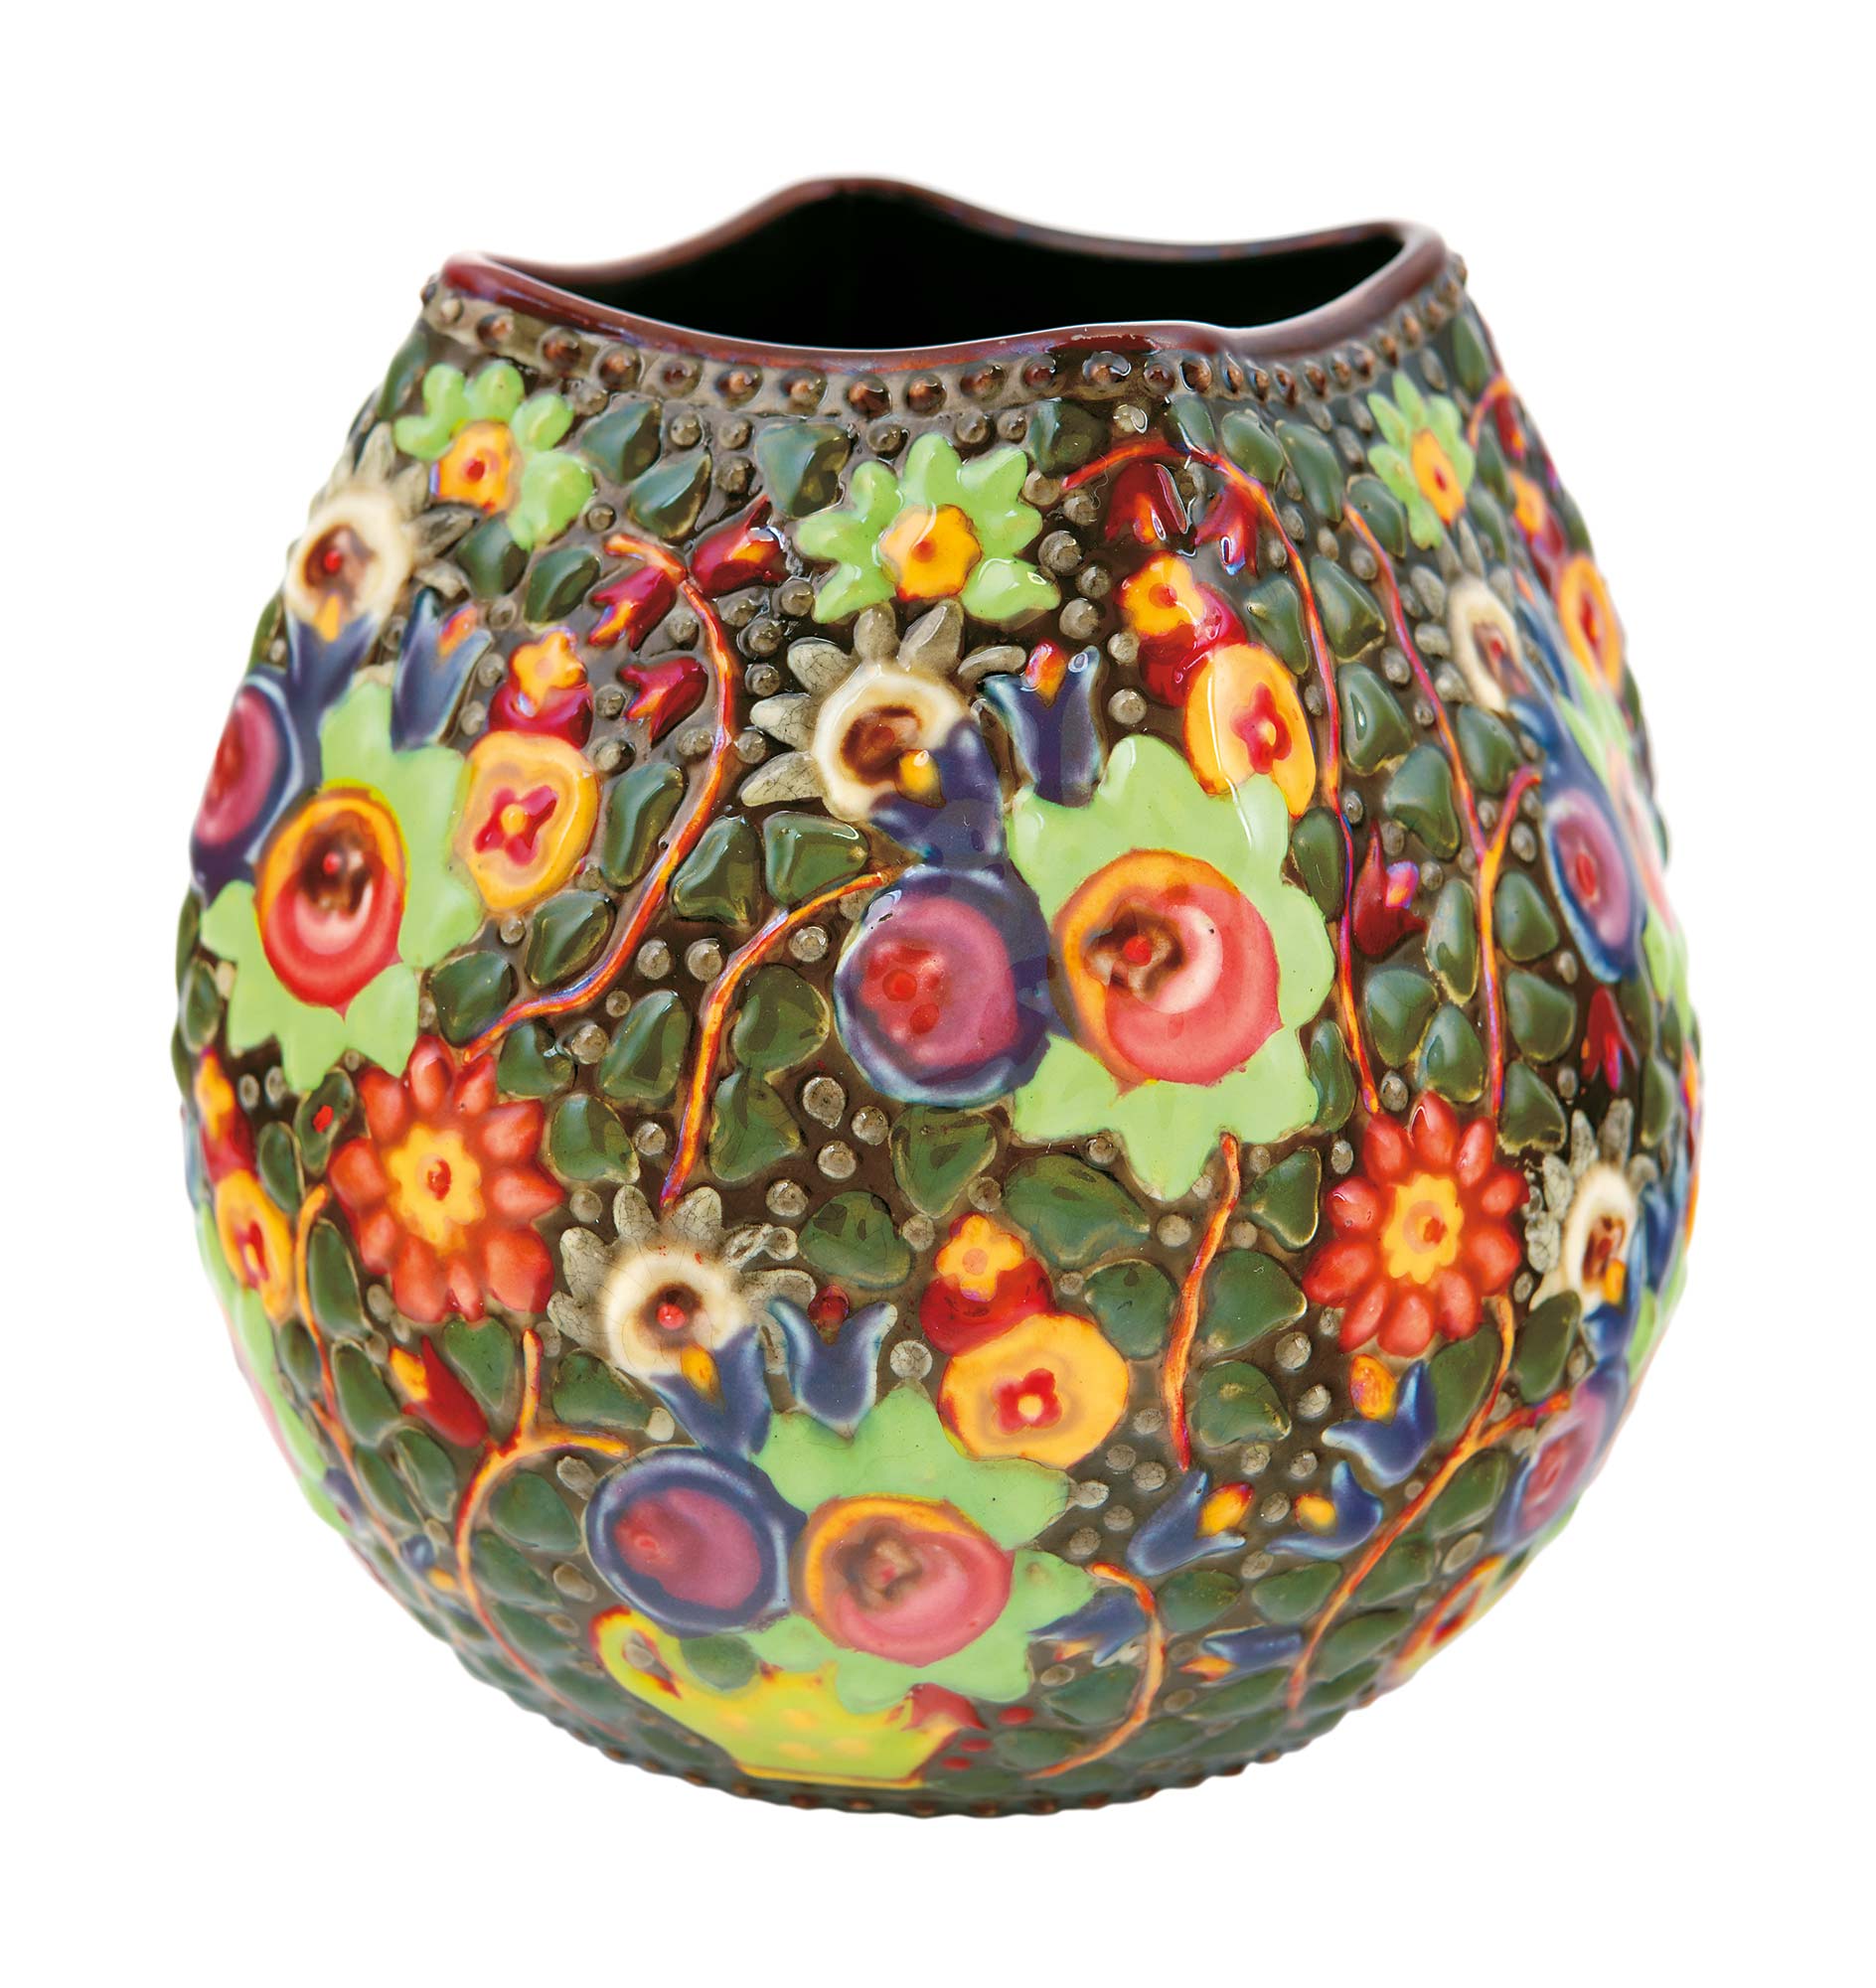 Zsolnay Vase with Convex Flower Decoration, Zsolnay, around 1900